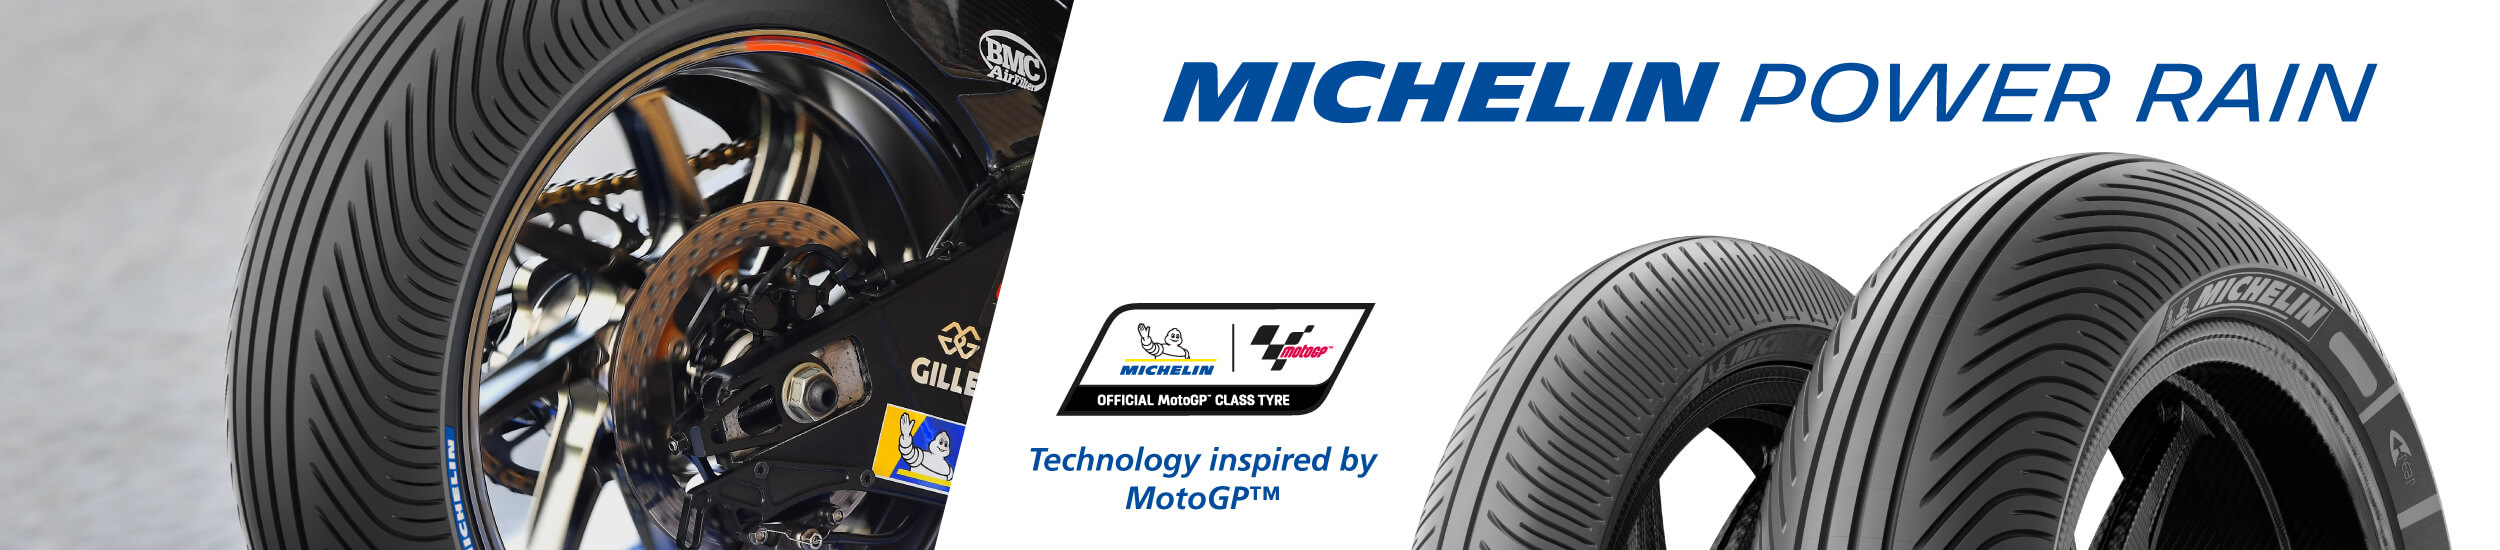 Michelin Power Rain Banner